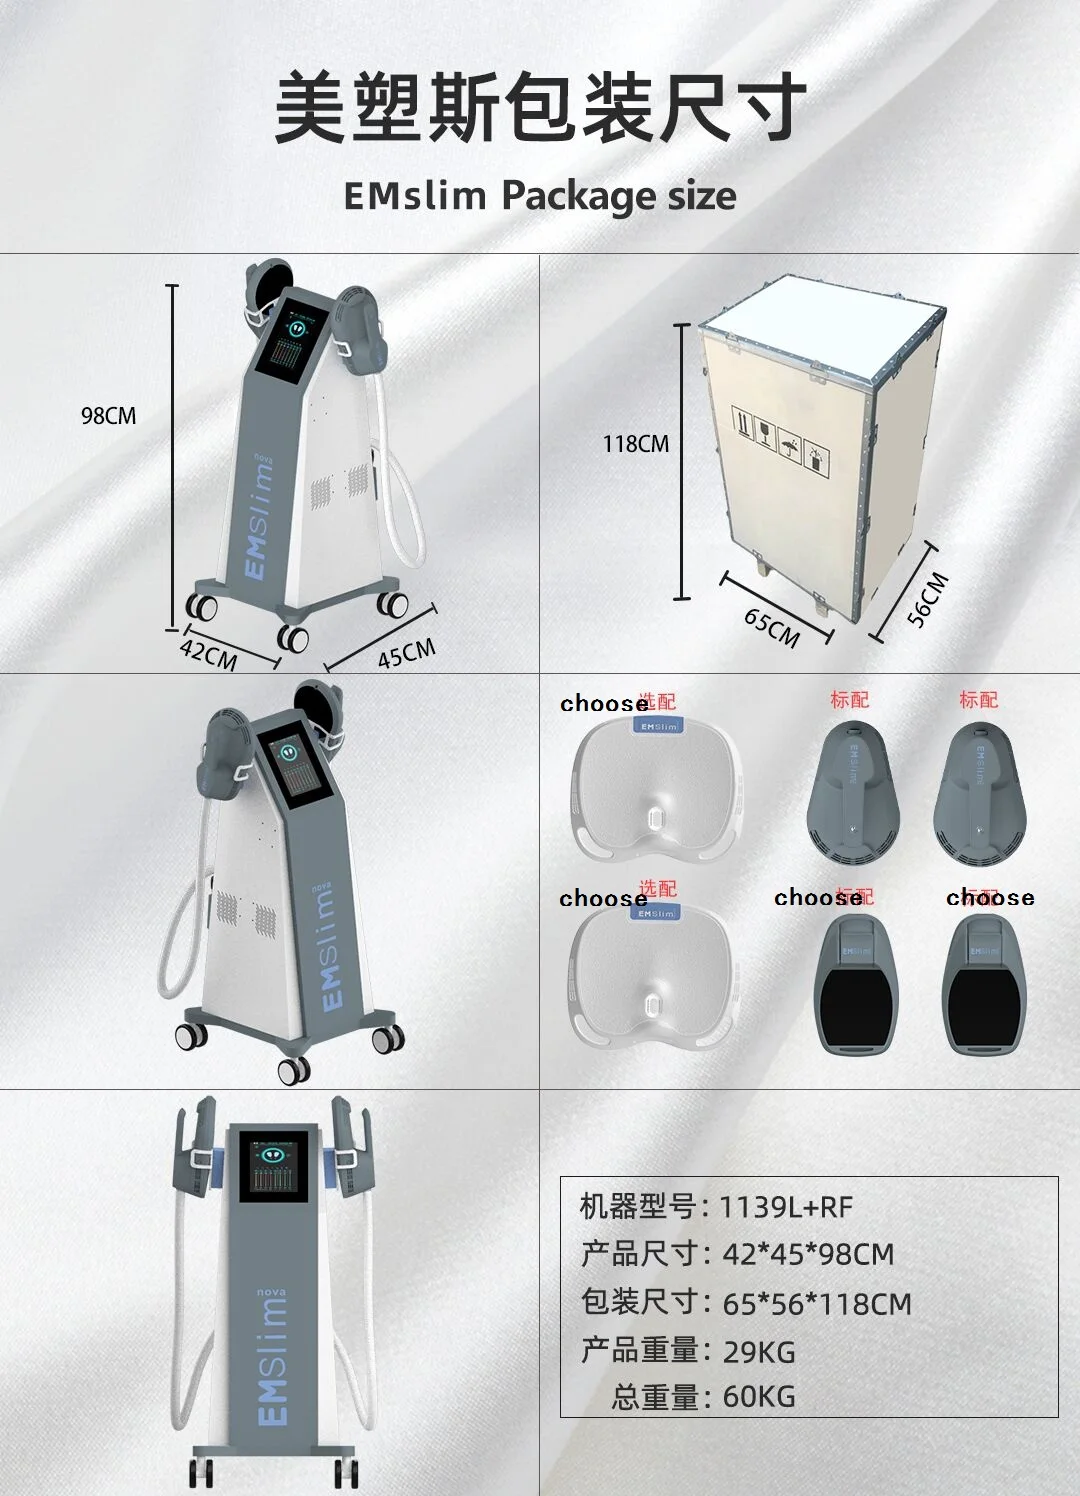 Slim Beauty Sinco Emslim 4 Handles Build Muscle Stimulator Machine ems sculpting Rf Neo Body Slimming machine